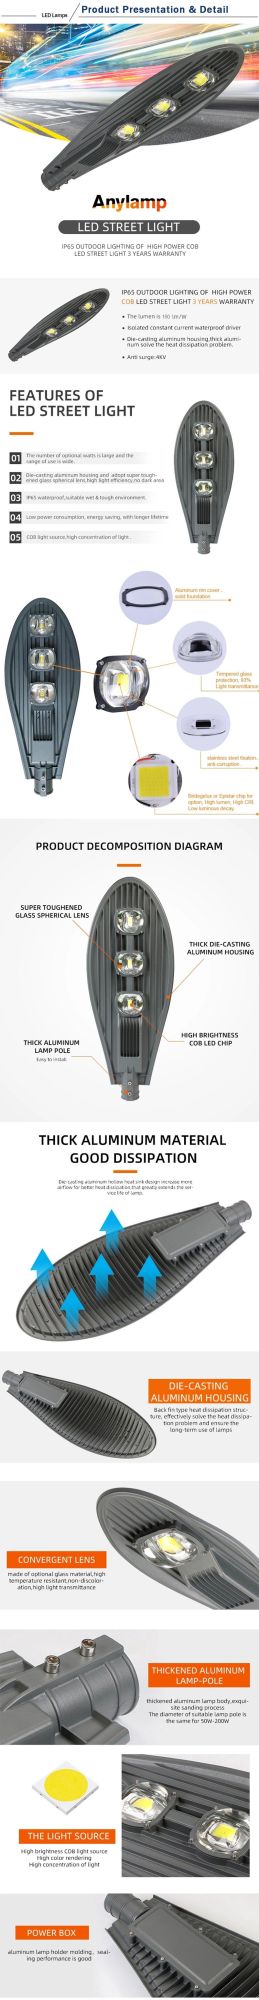 High Lumens LED Street Light Waterproof IP65 Outdoor Lighting Ce RoHS Cheap Price COB 30W LED Street Light